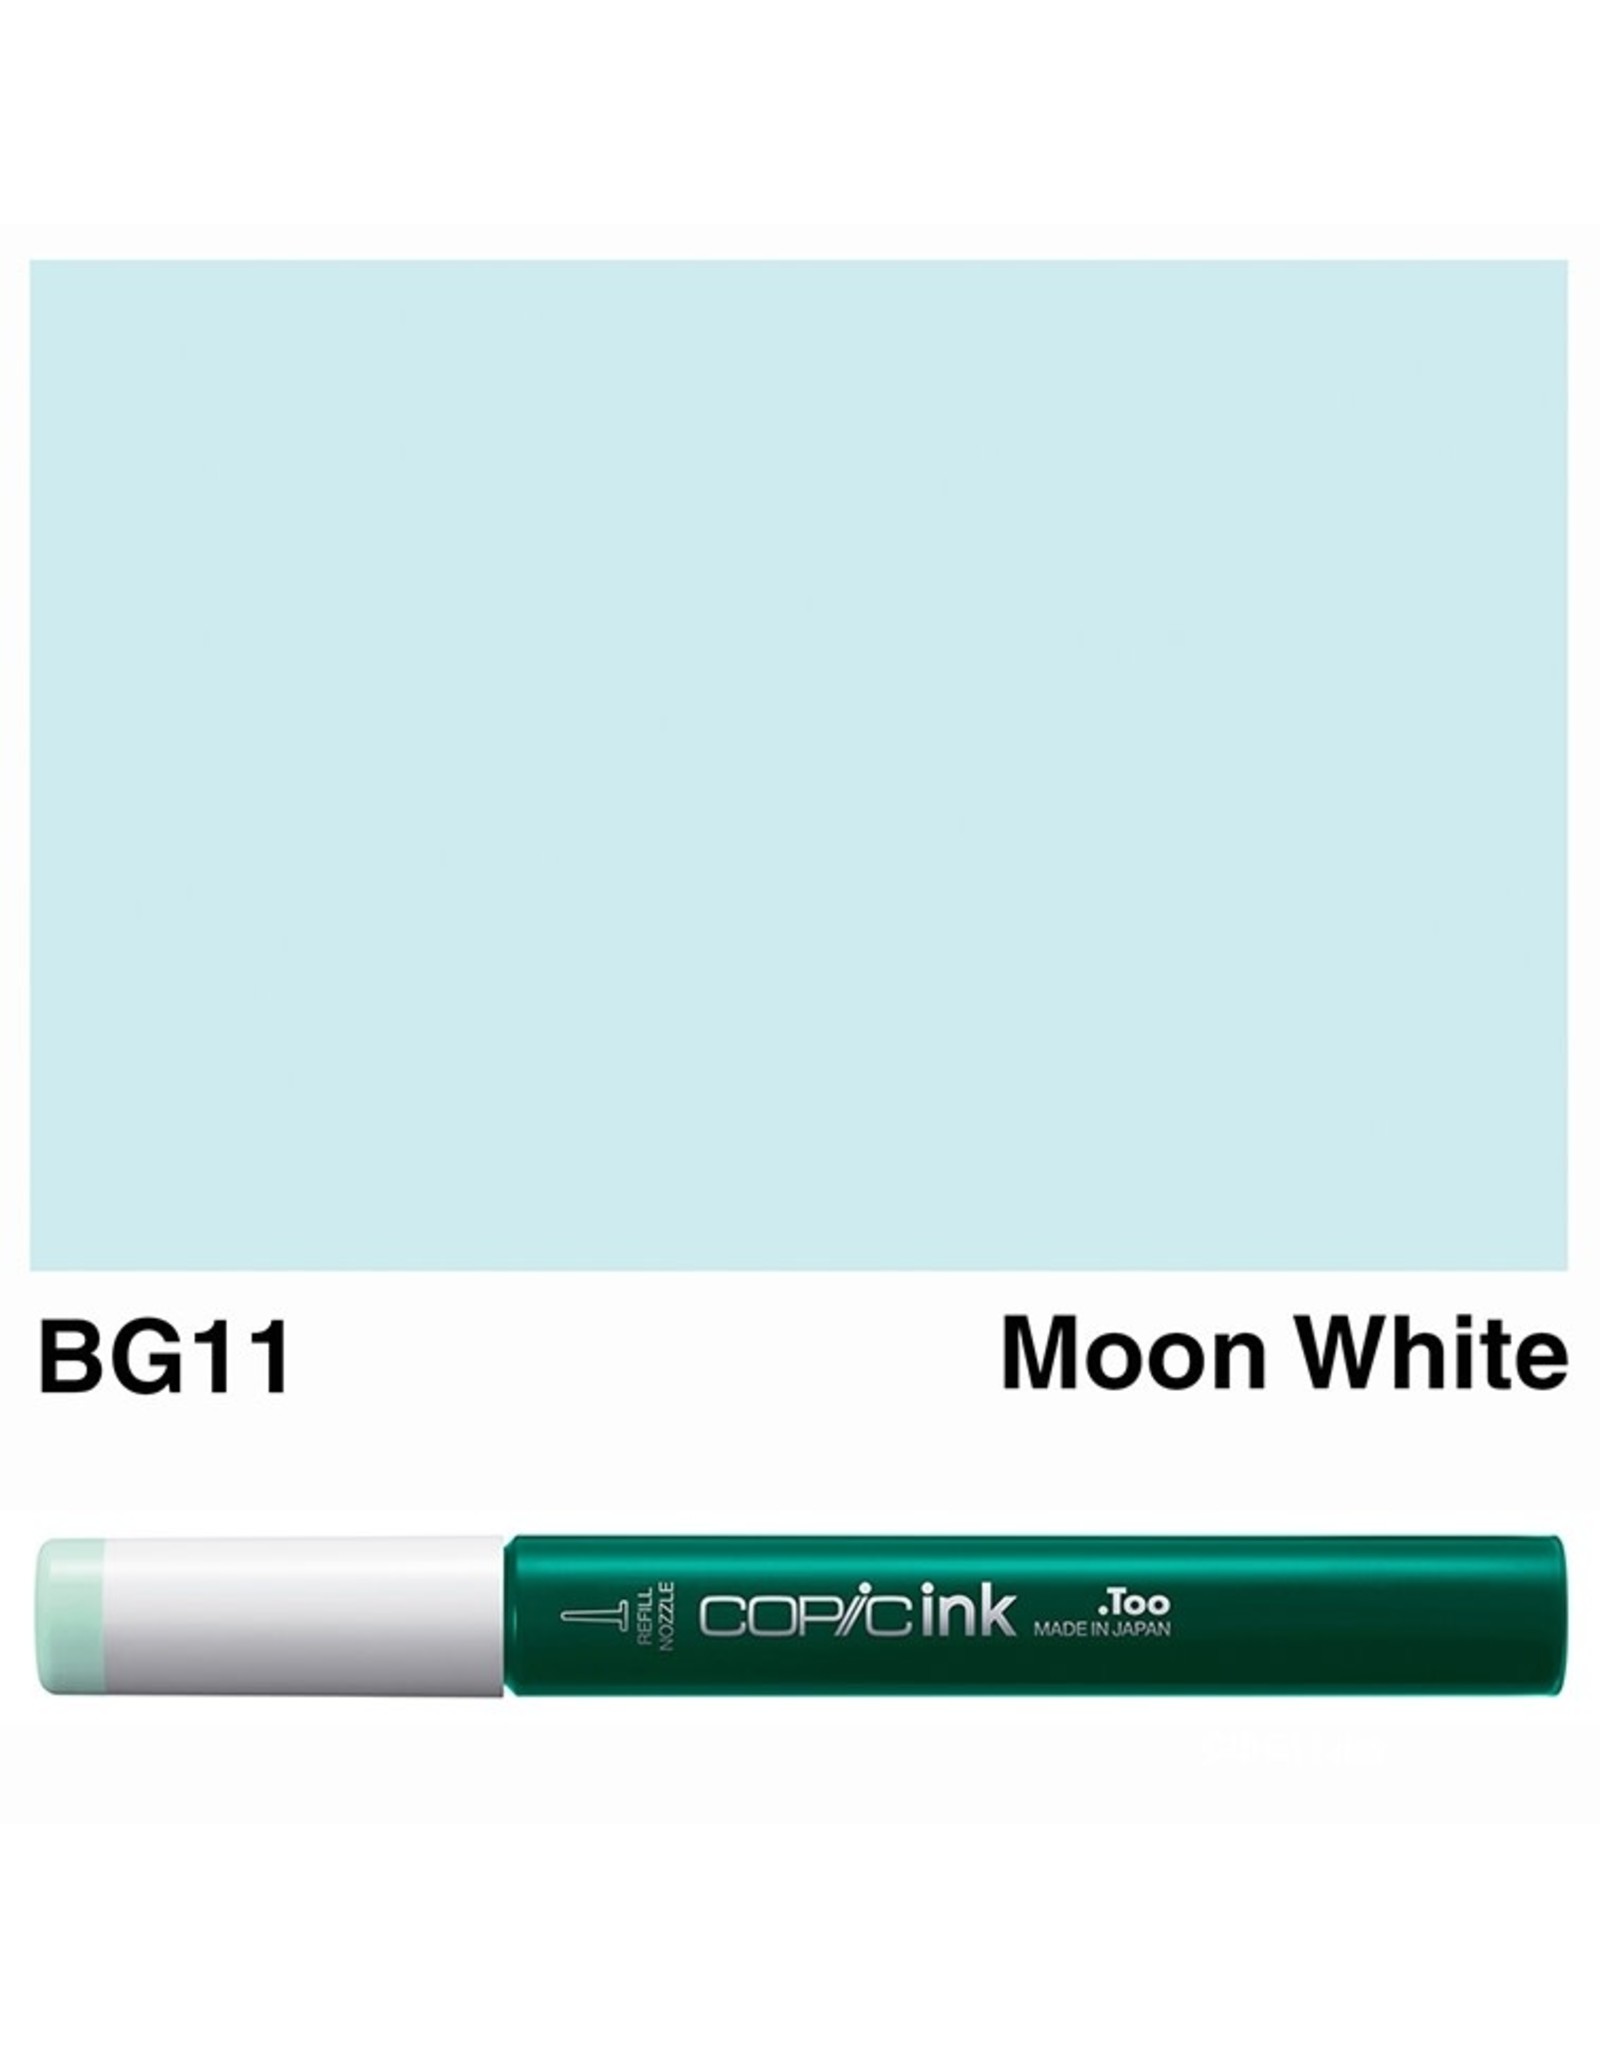 COPIC COPIC BG11 MOON WHITE REFILL